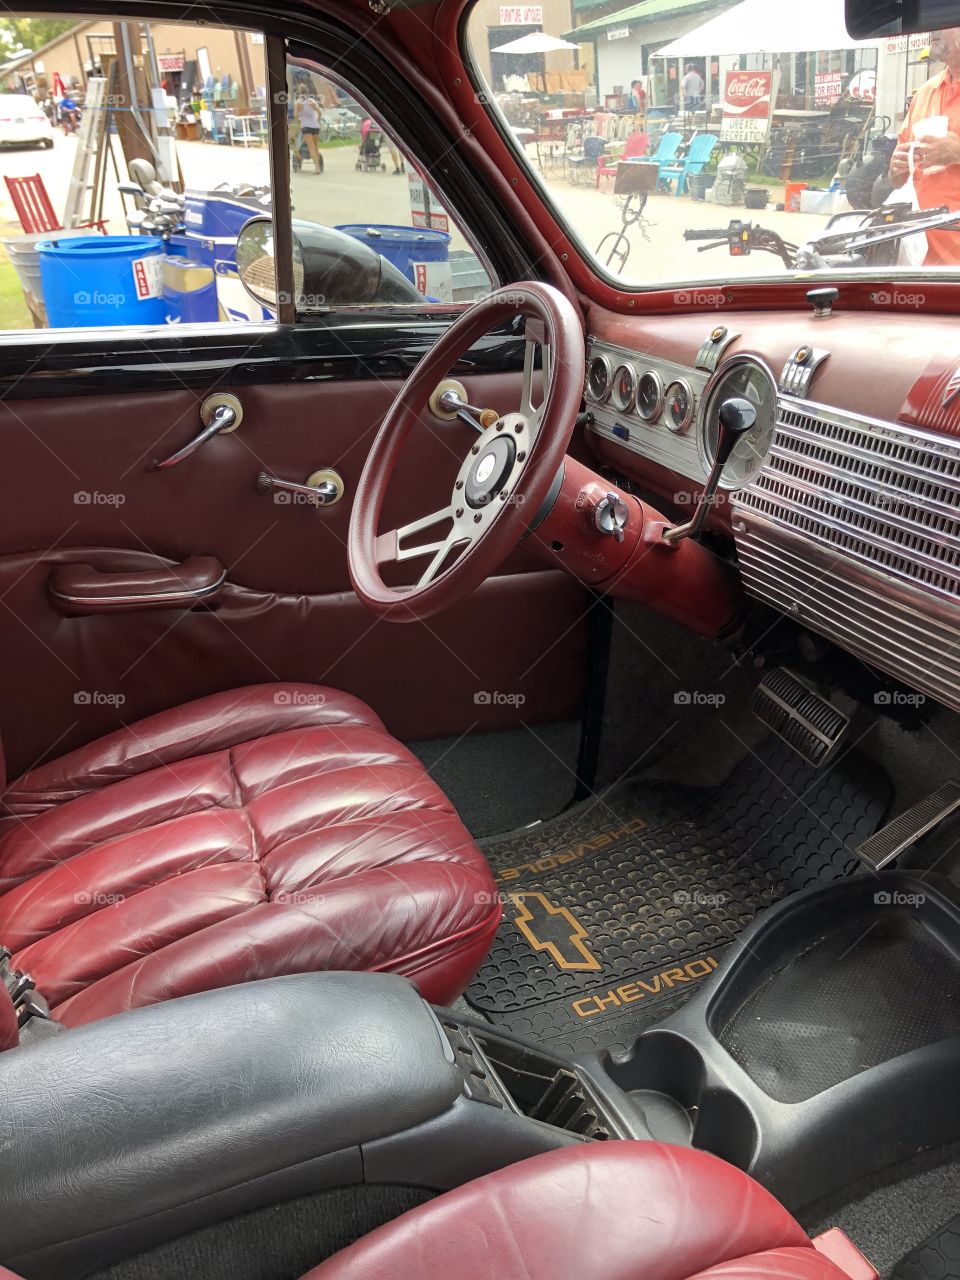 Chevy interior 